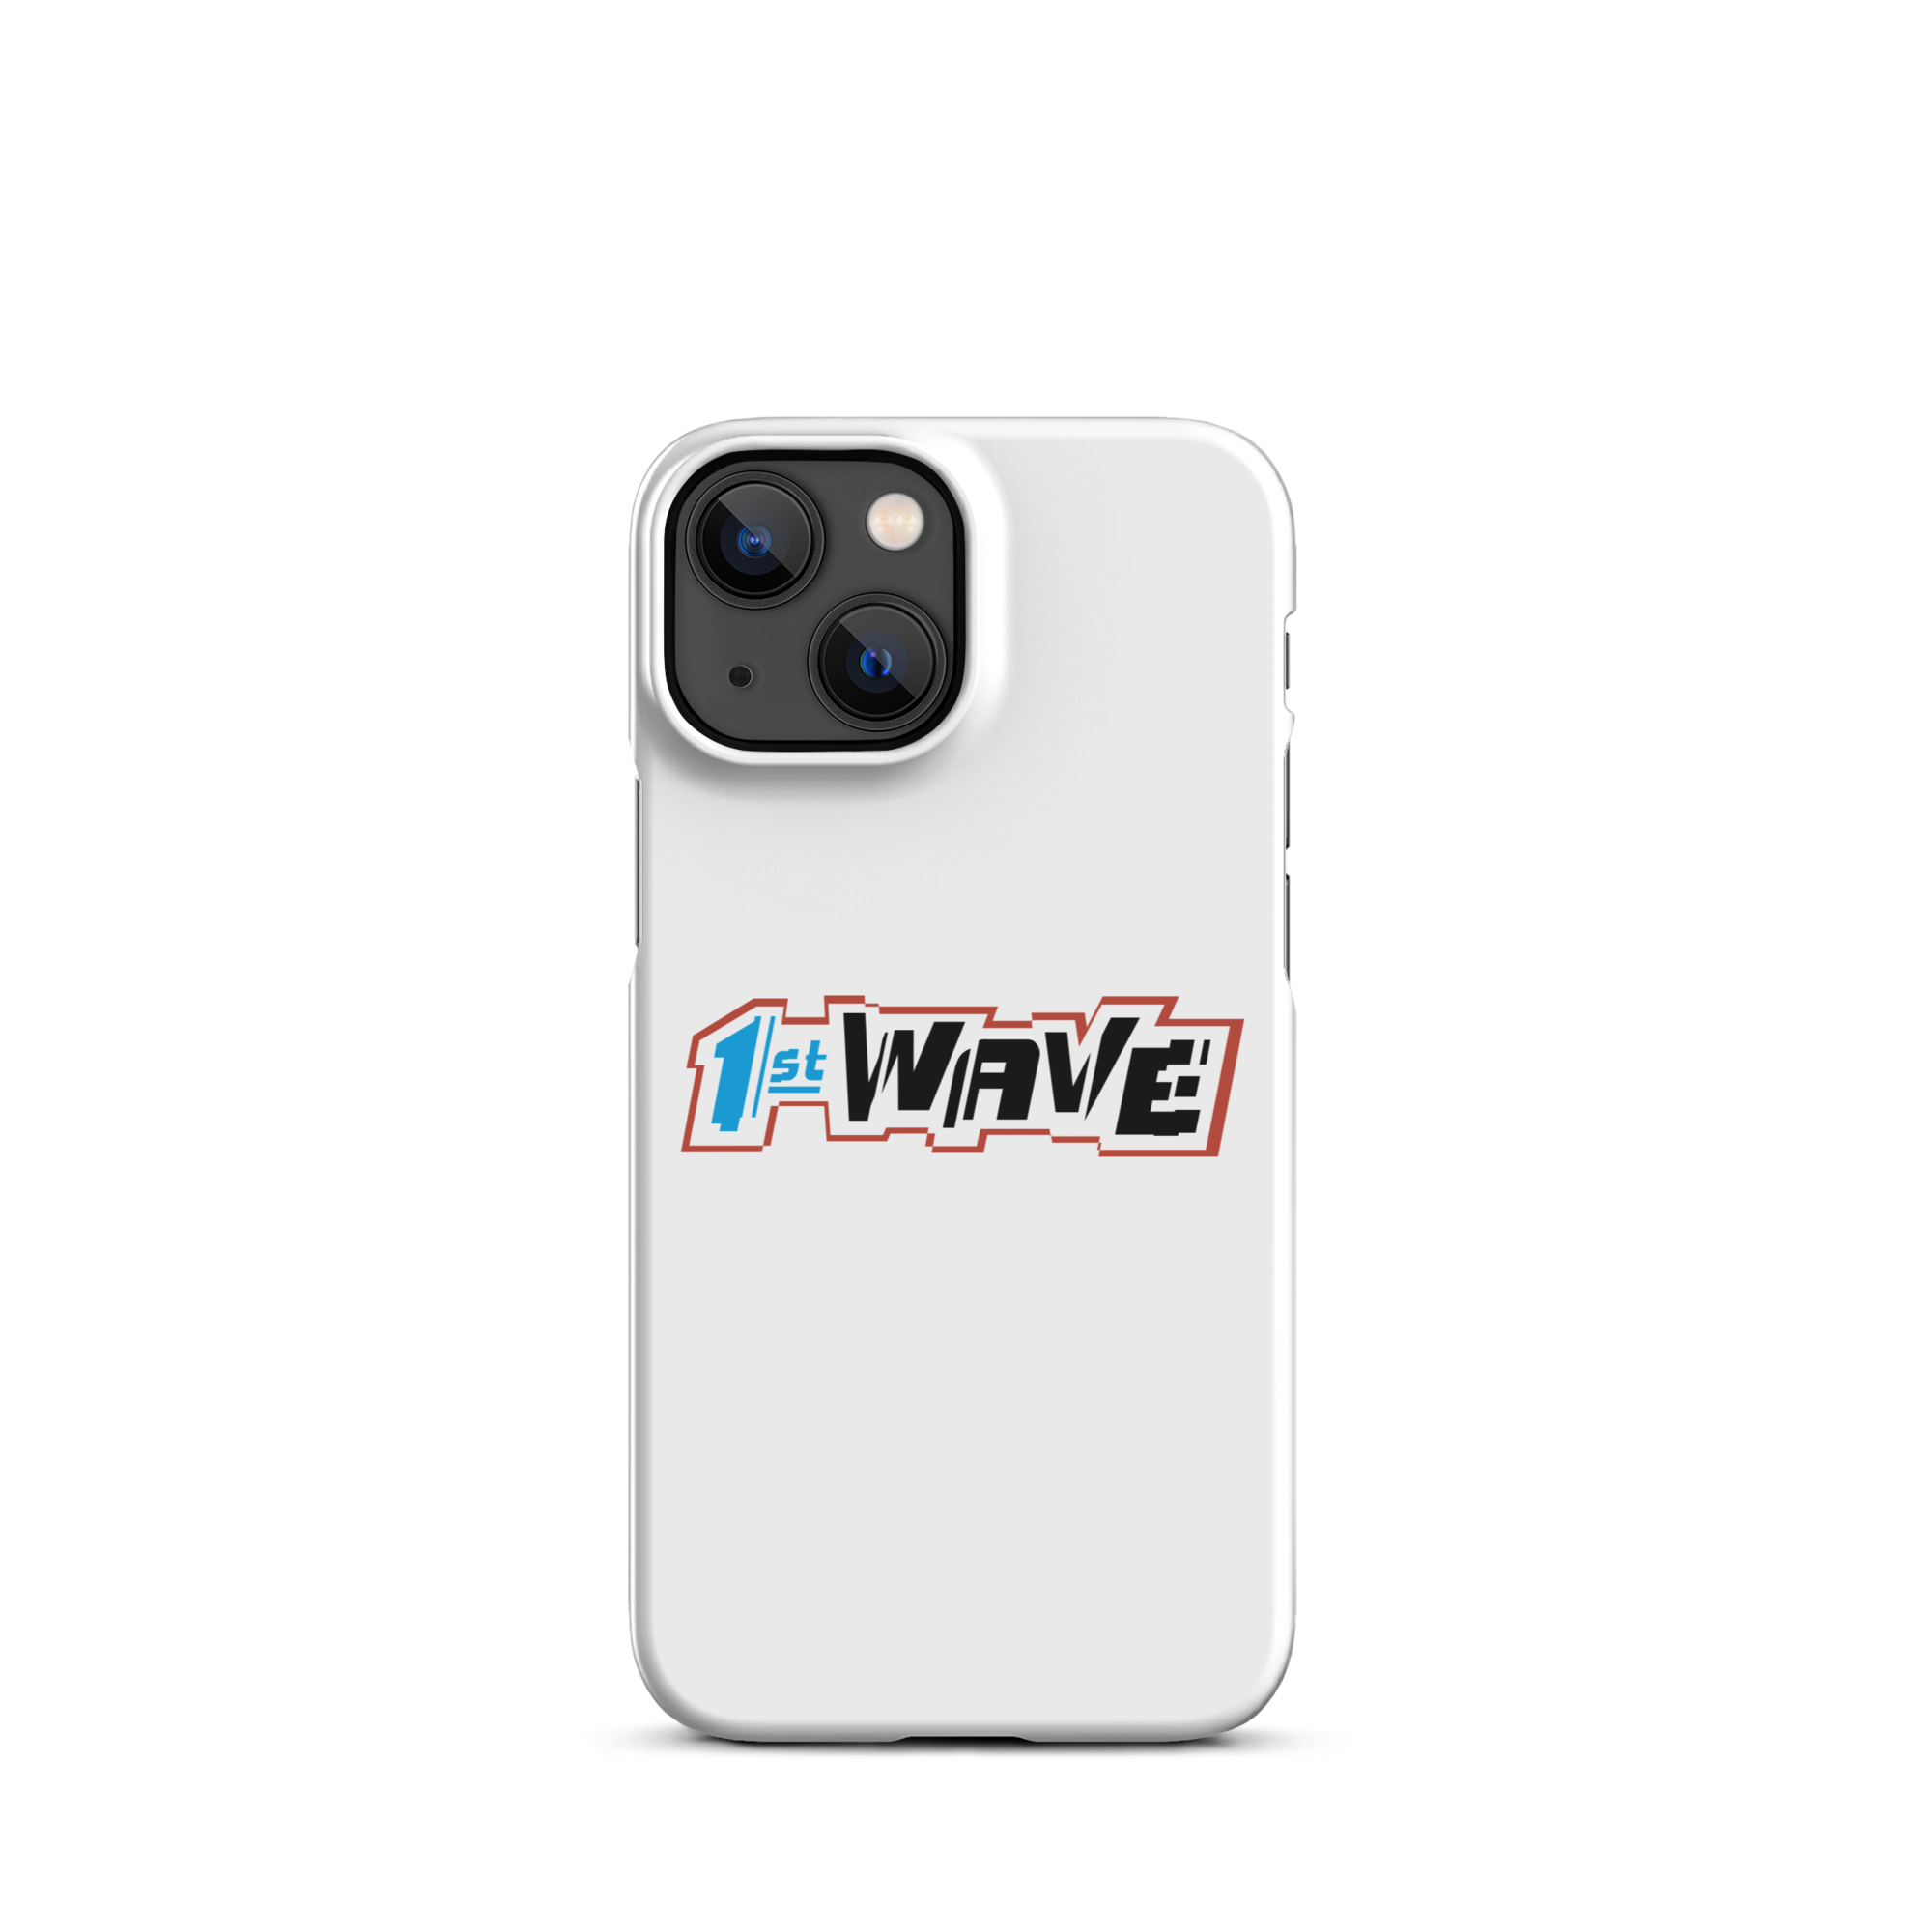 1st Wave: iPhone® Snap Case